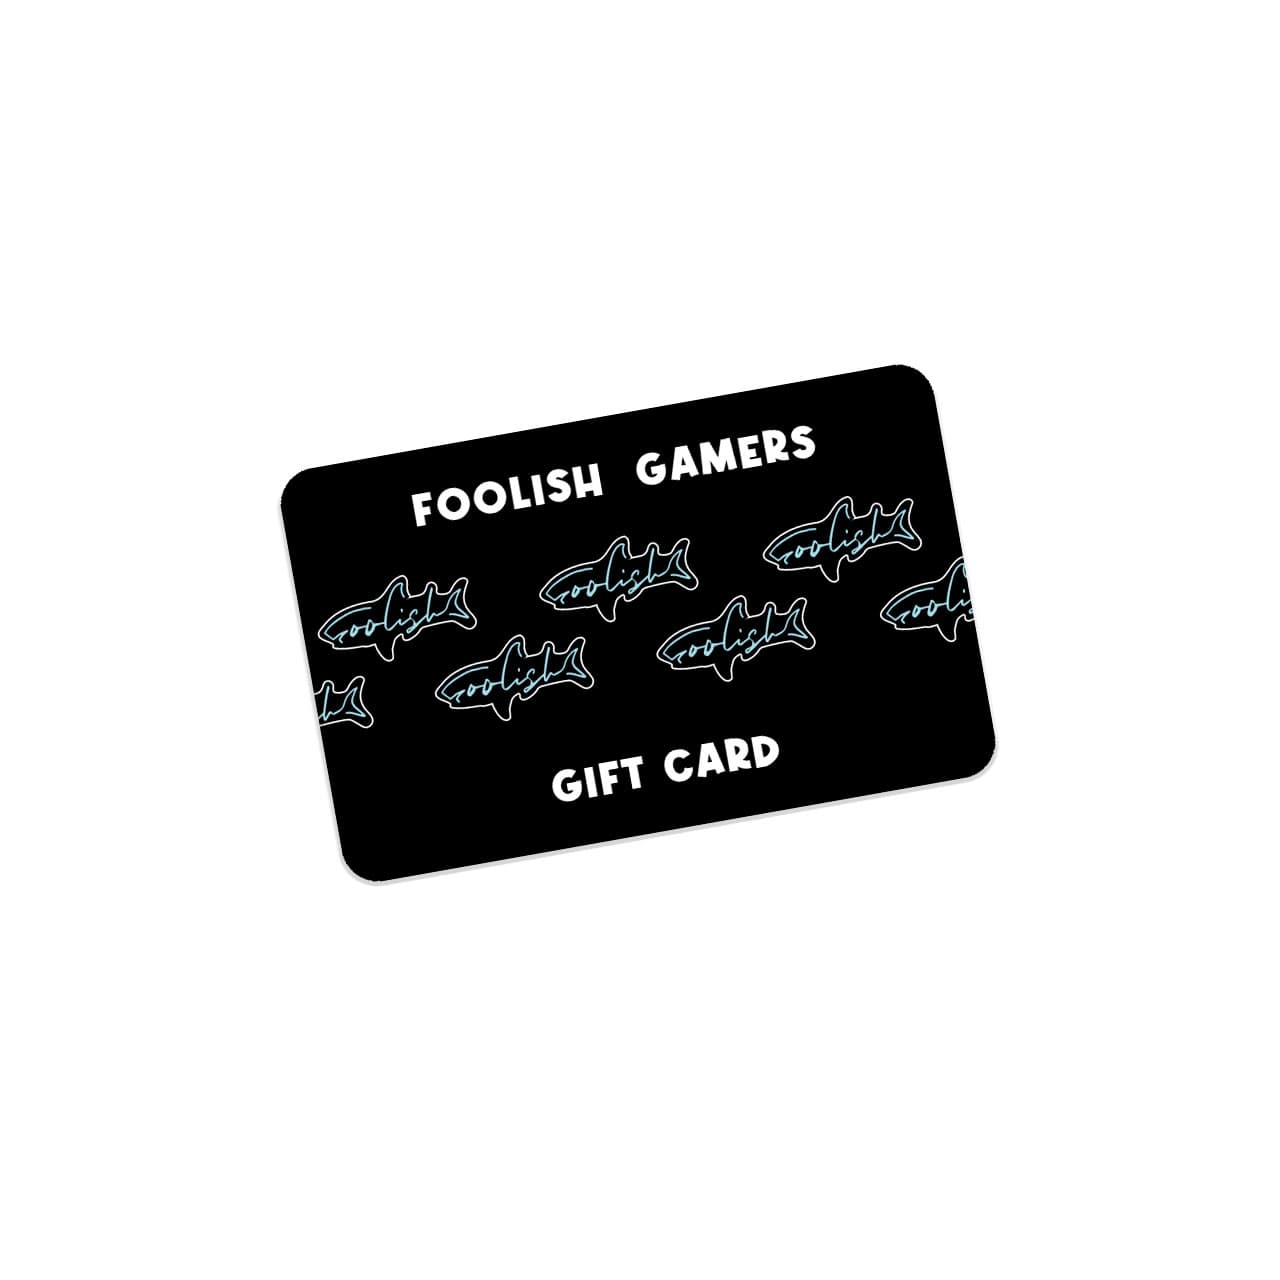 Foolish Gamers Gift Card